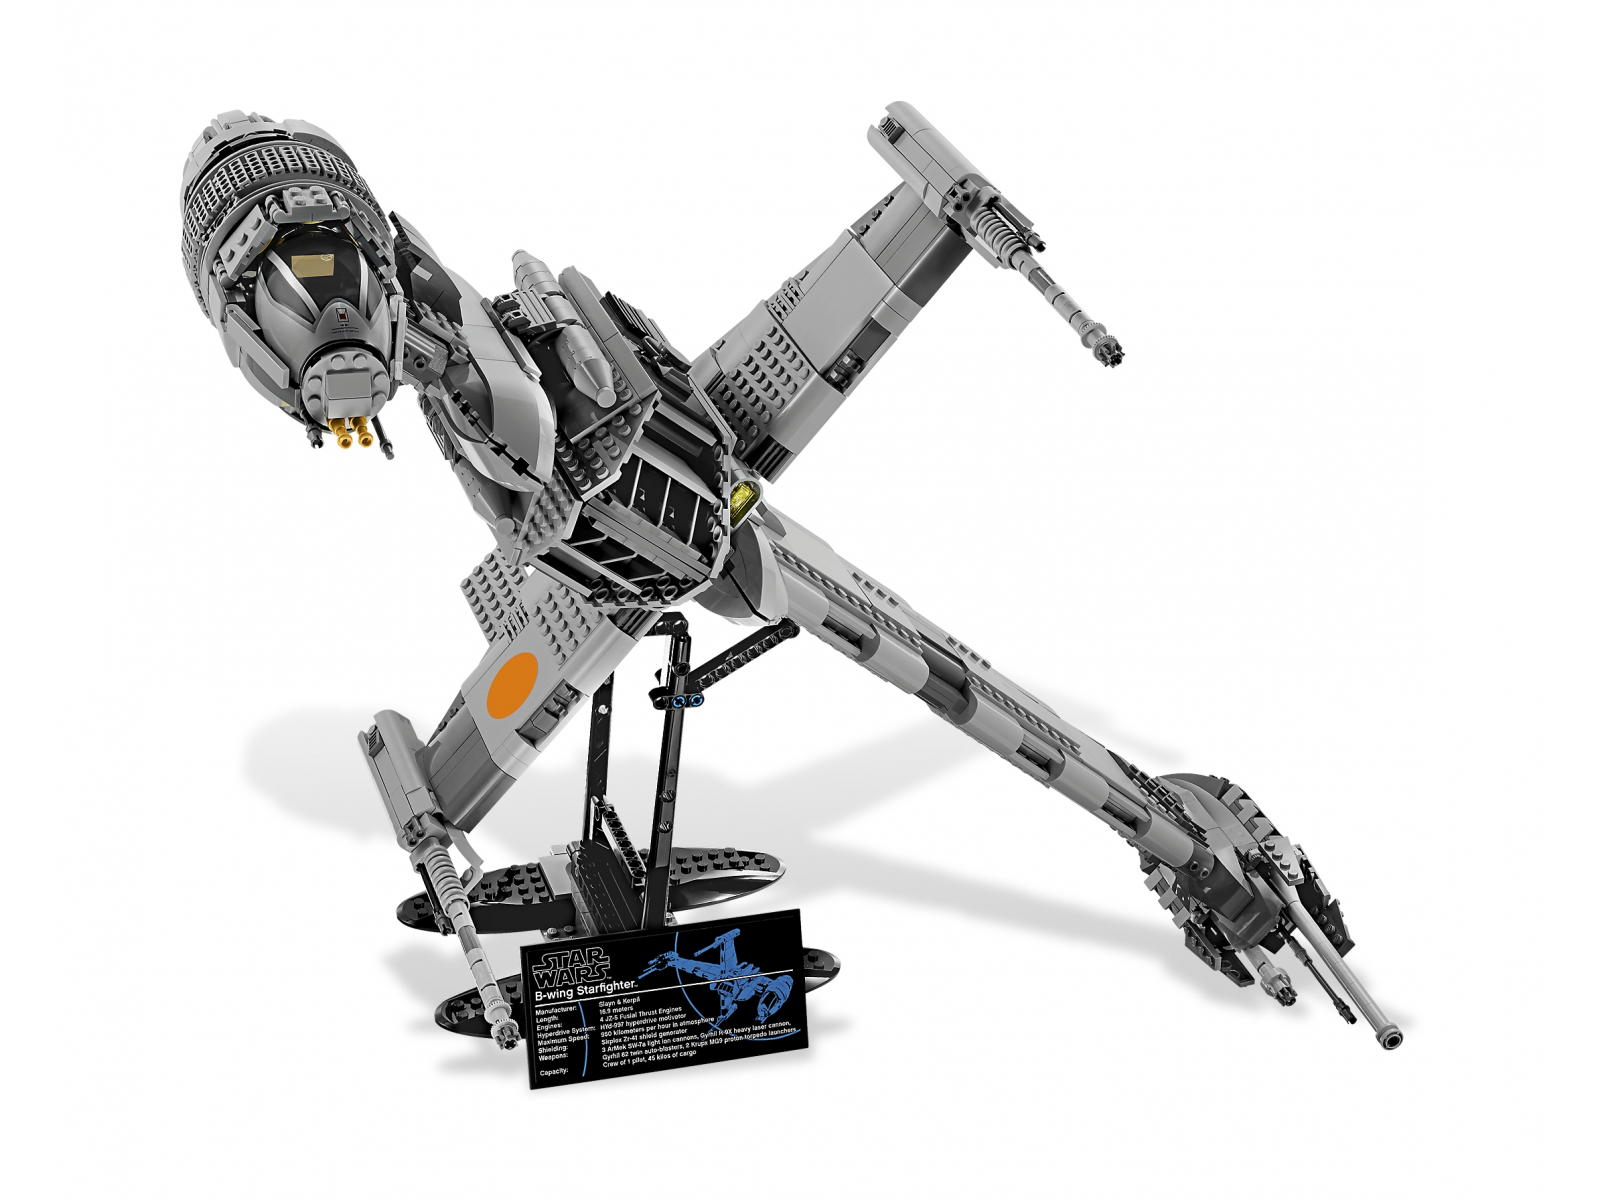 Plik:Lego-star-wars-10227-b-wing-starfighter.jpg